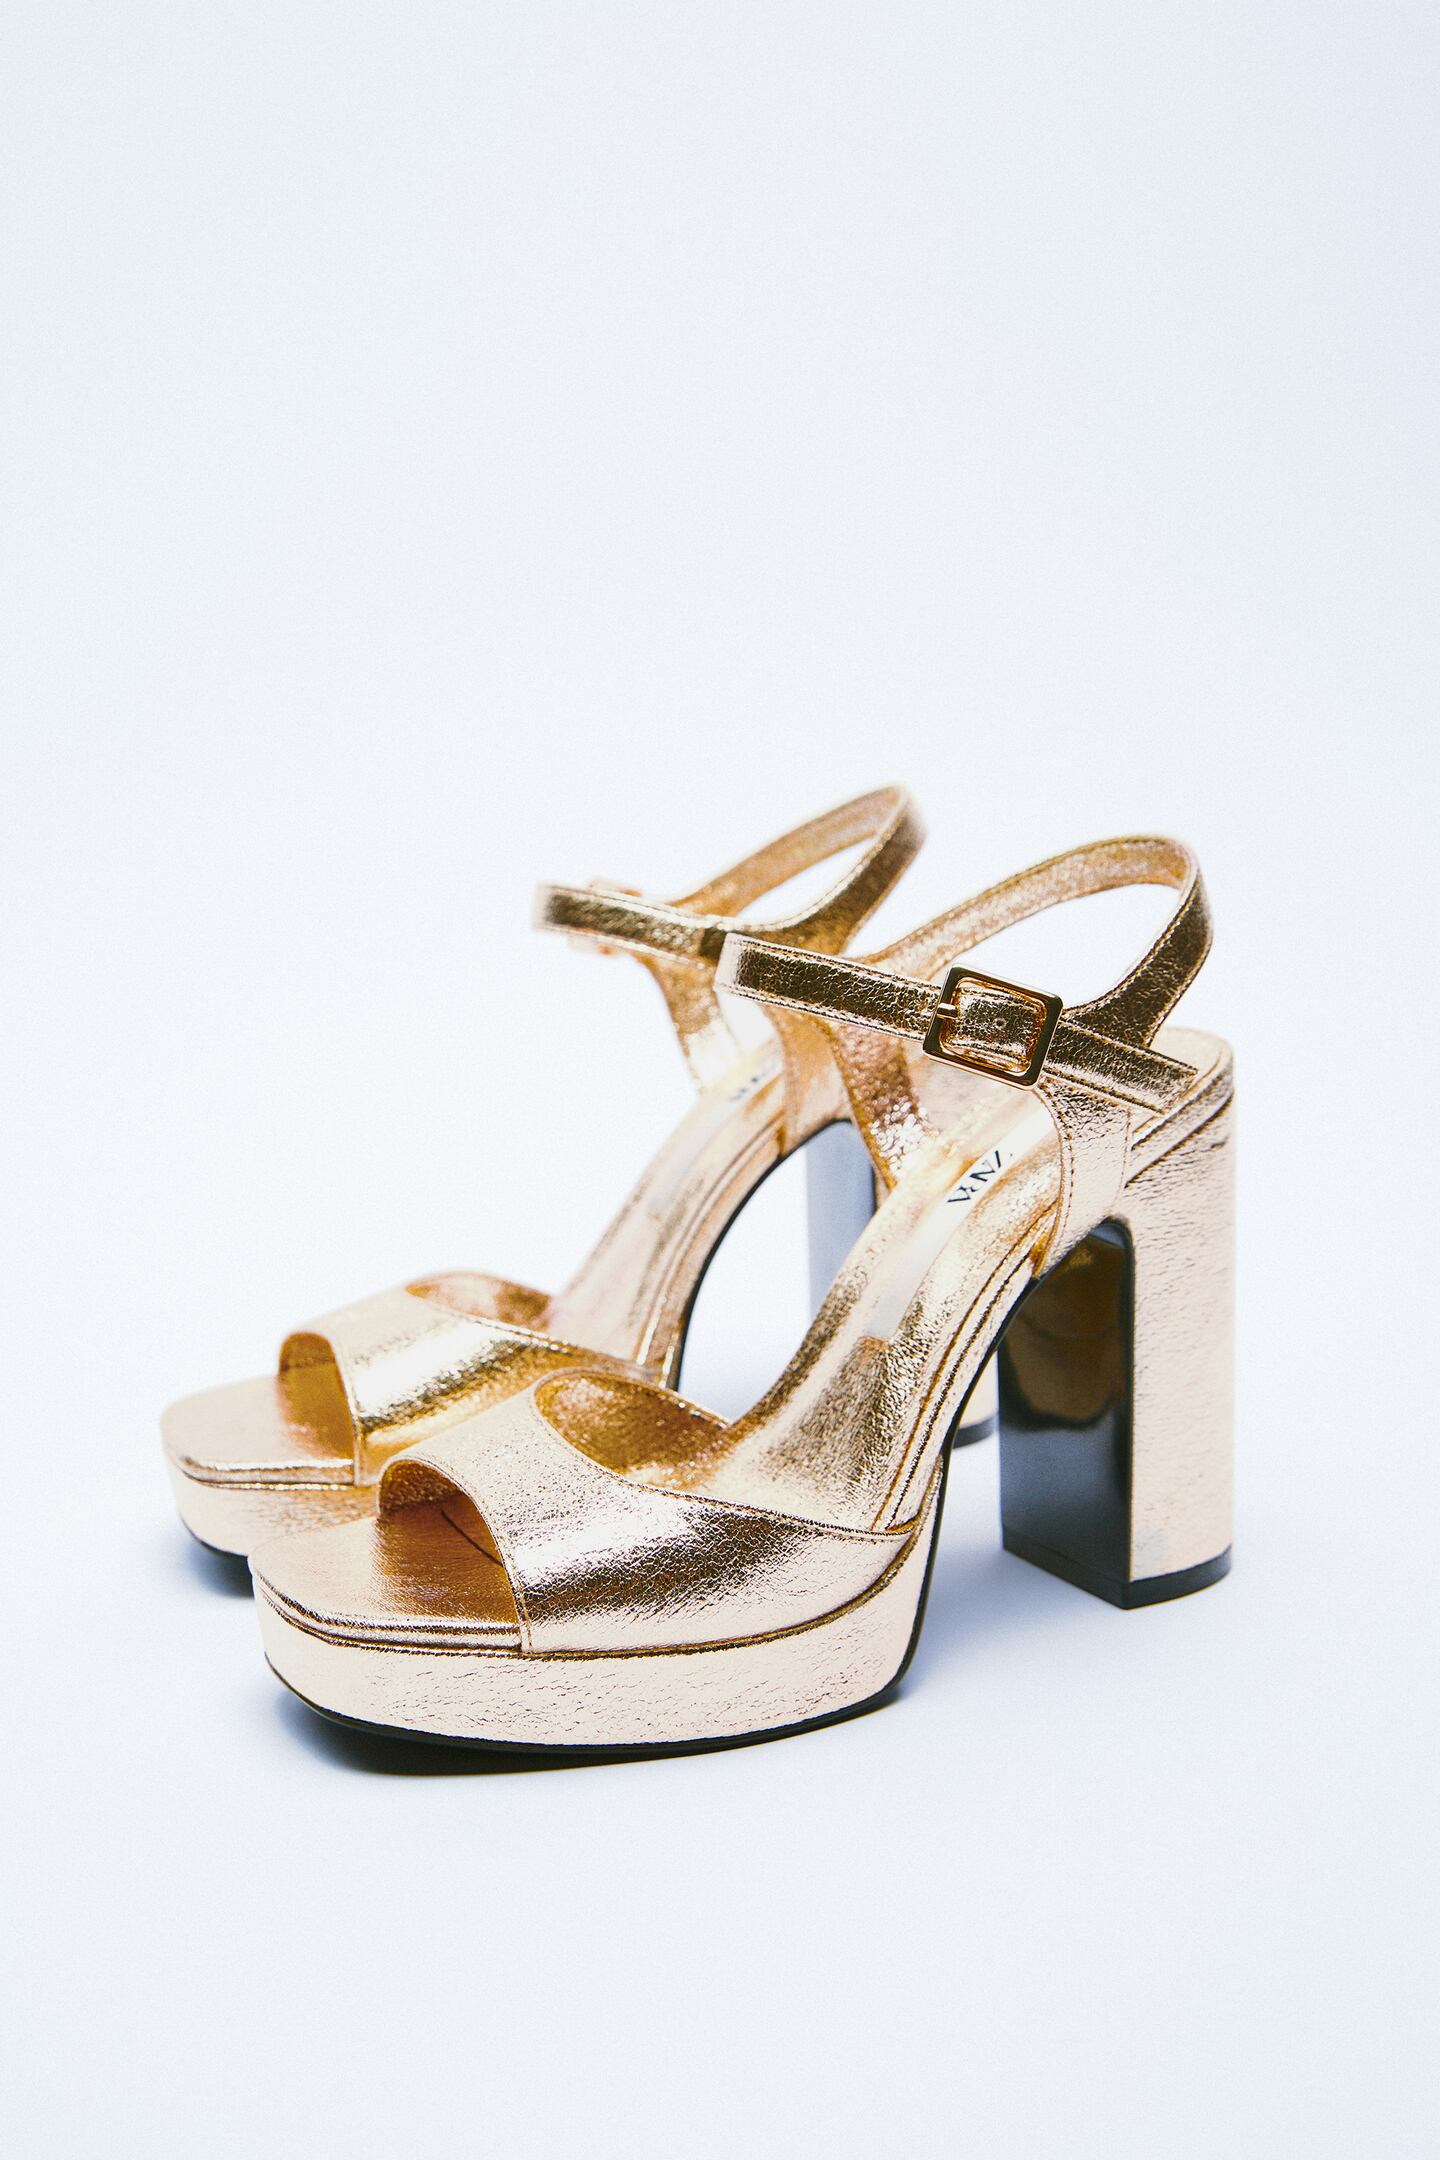 Zara | Shoes | Zara Gold Strappy High Heels Sandals | Poshmark